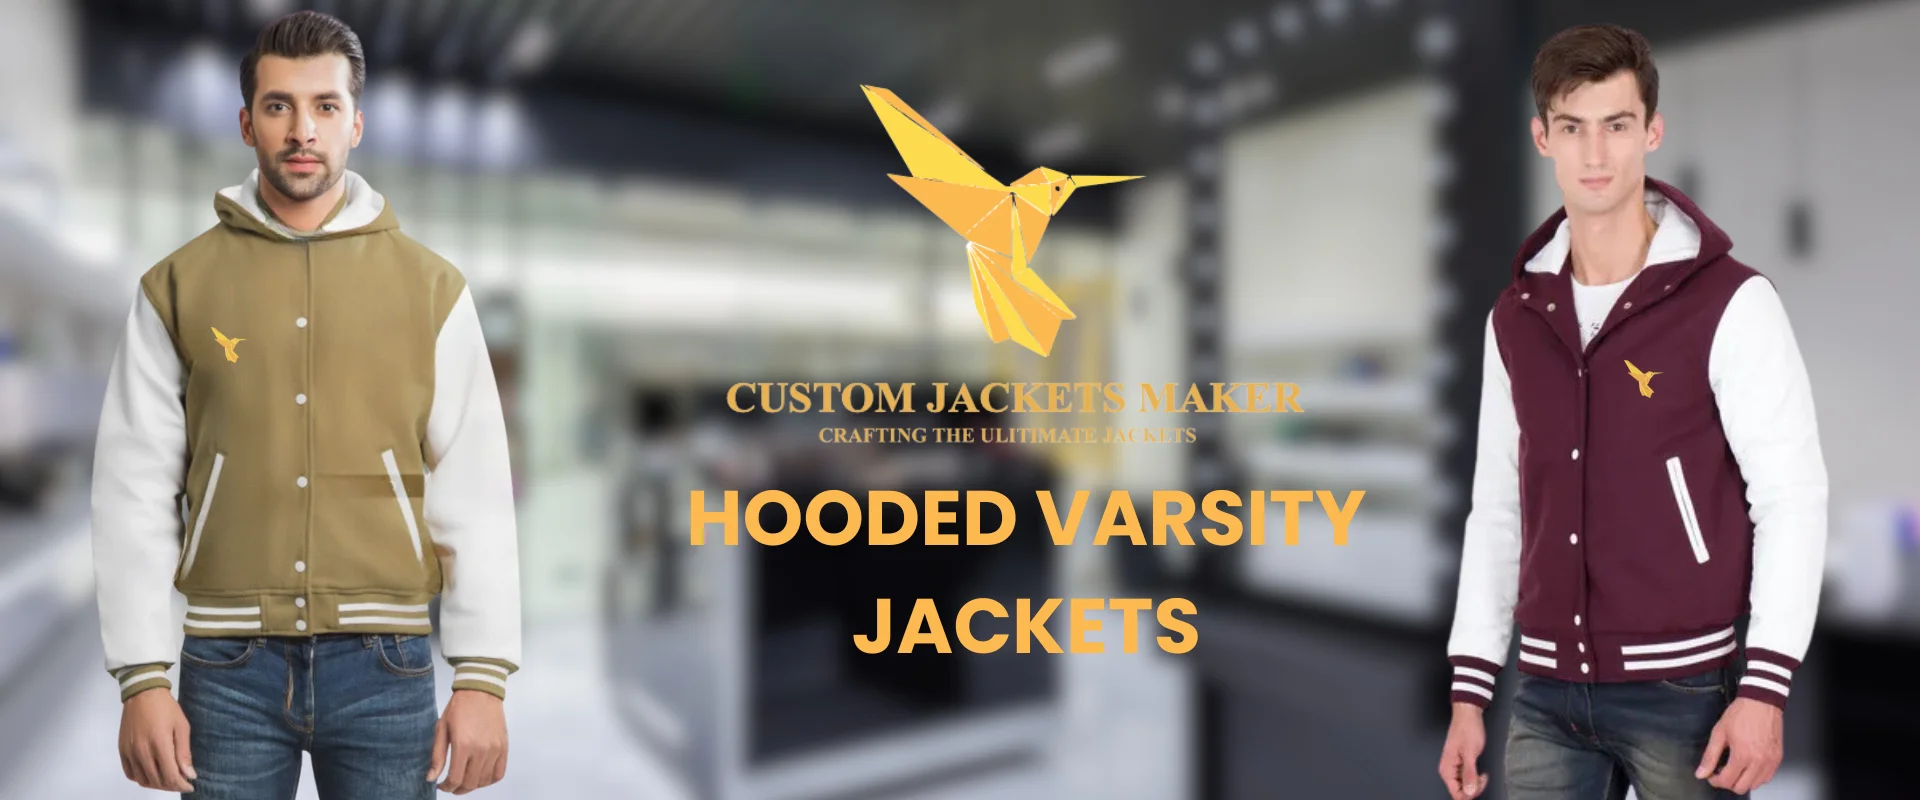 Banner Image of Hooded Varsity jacket